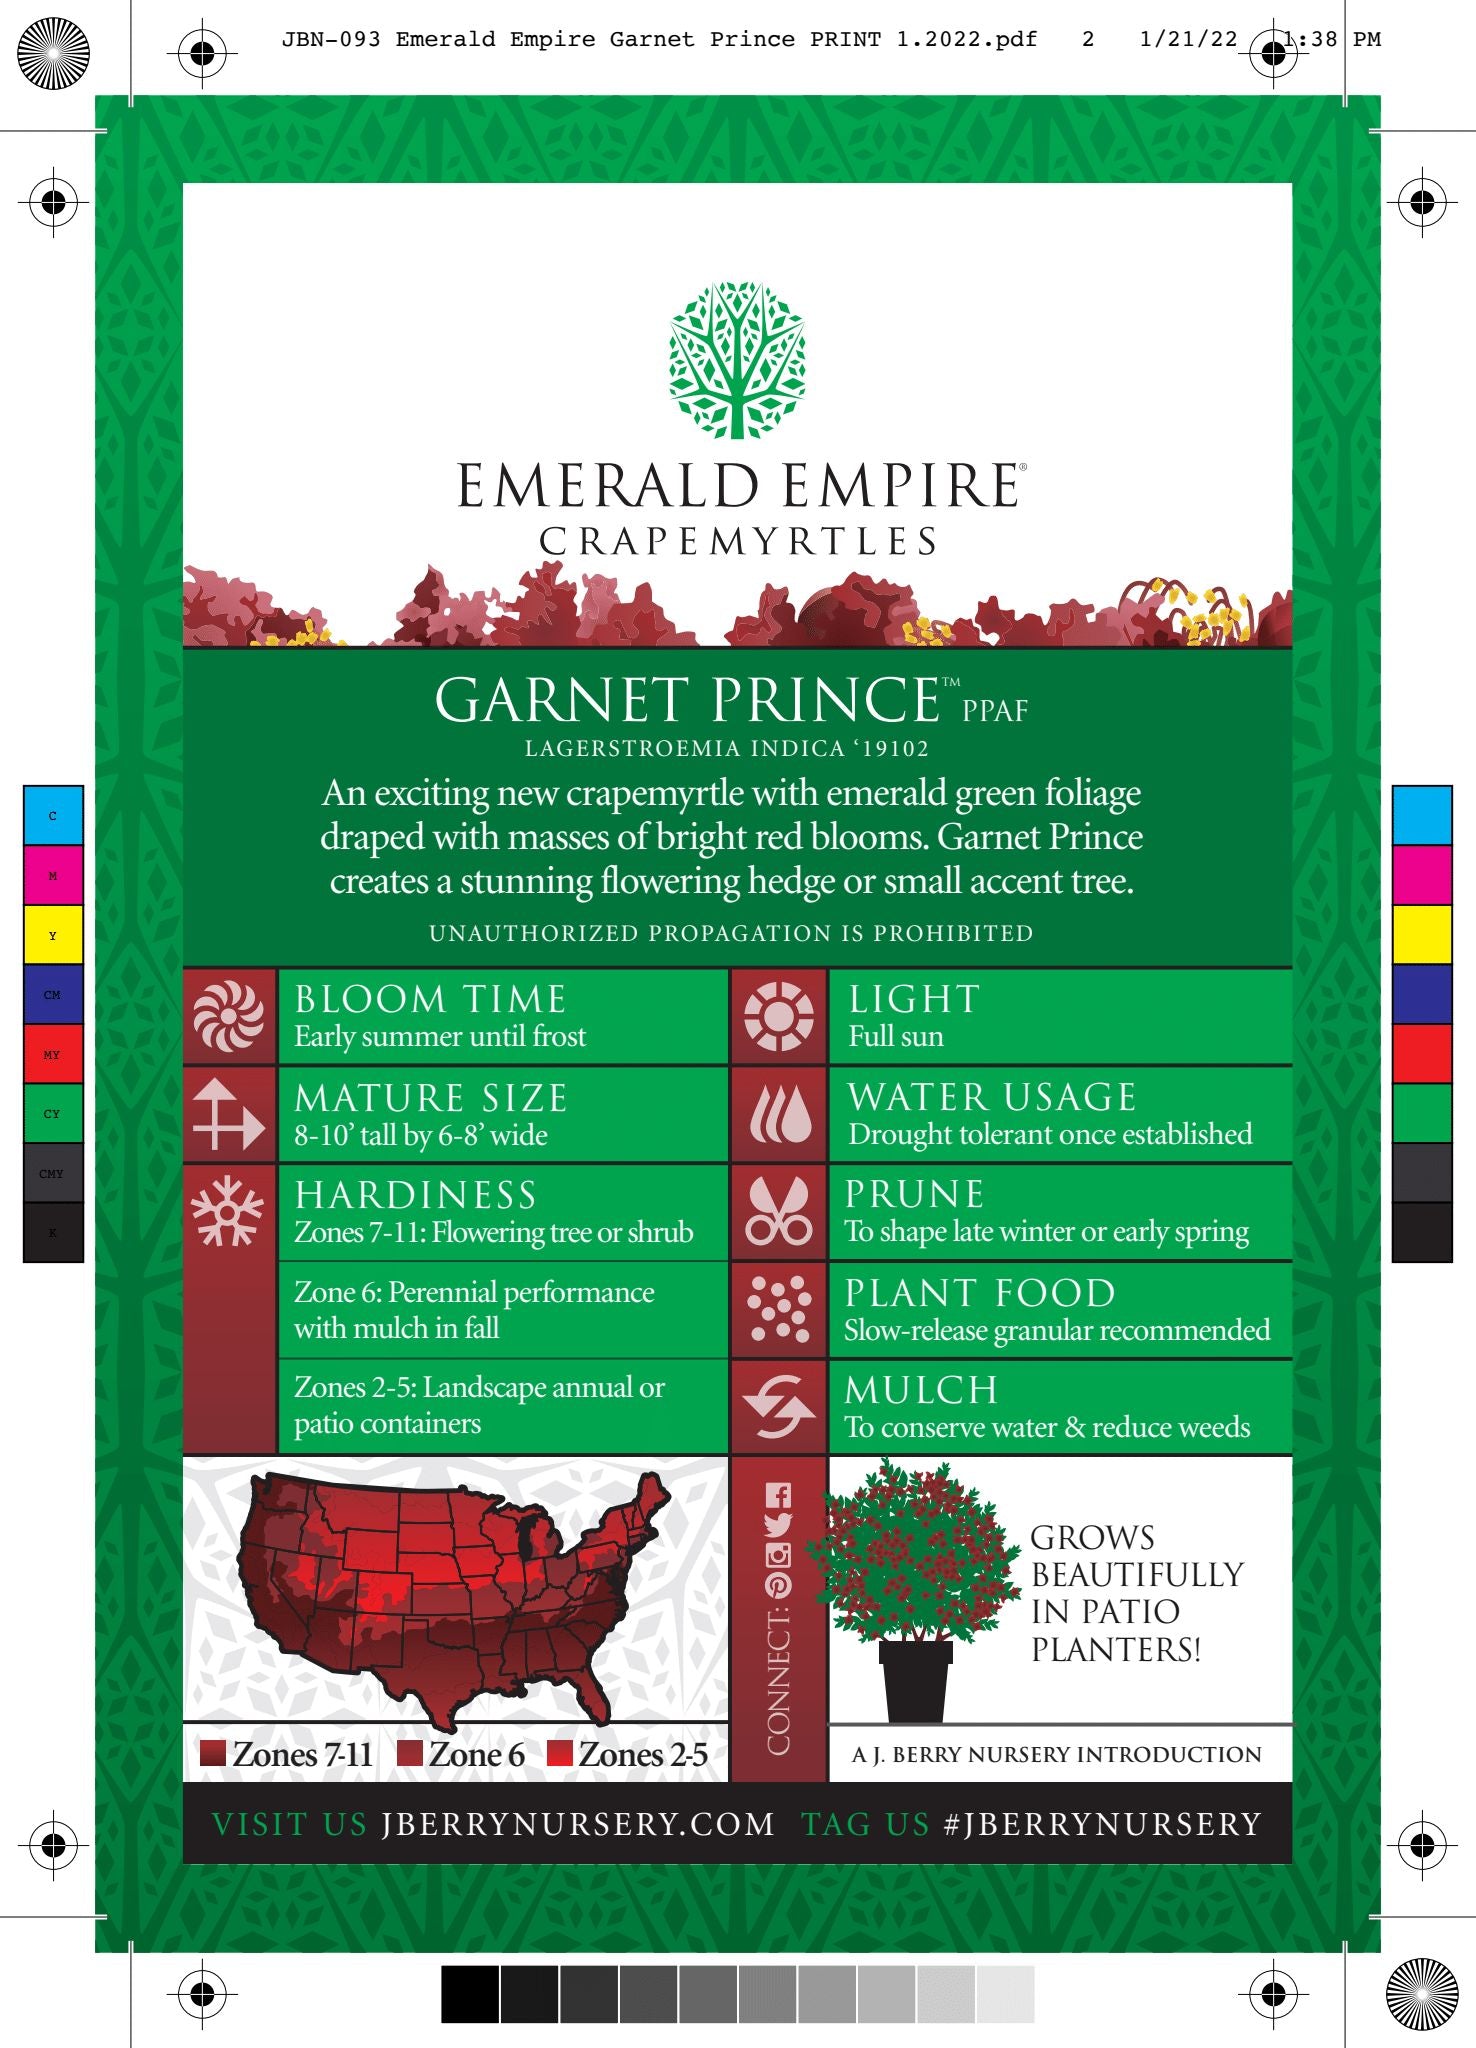 Garnet Prince™ - Emerald Empire® Deciduous Crape Myrtle Tree - 2 Gallon